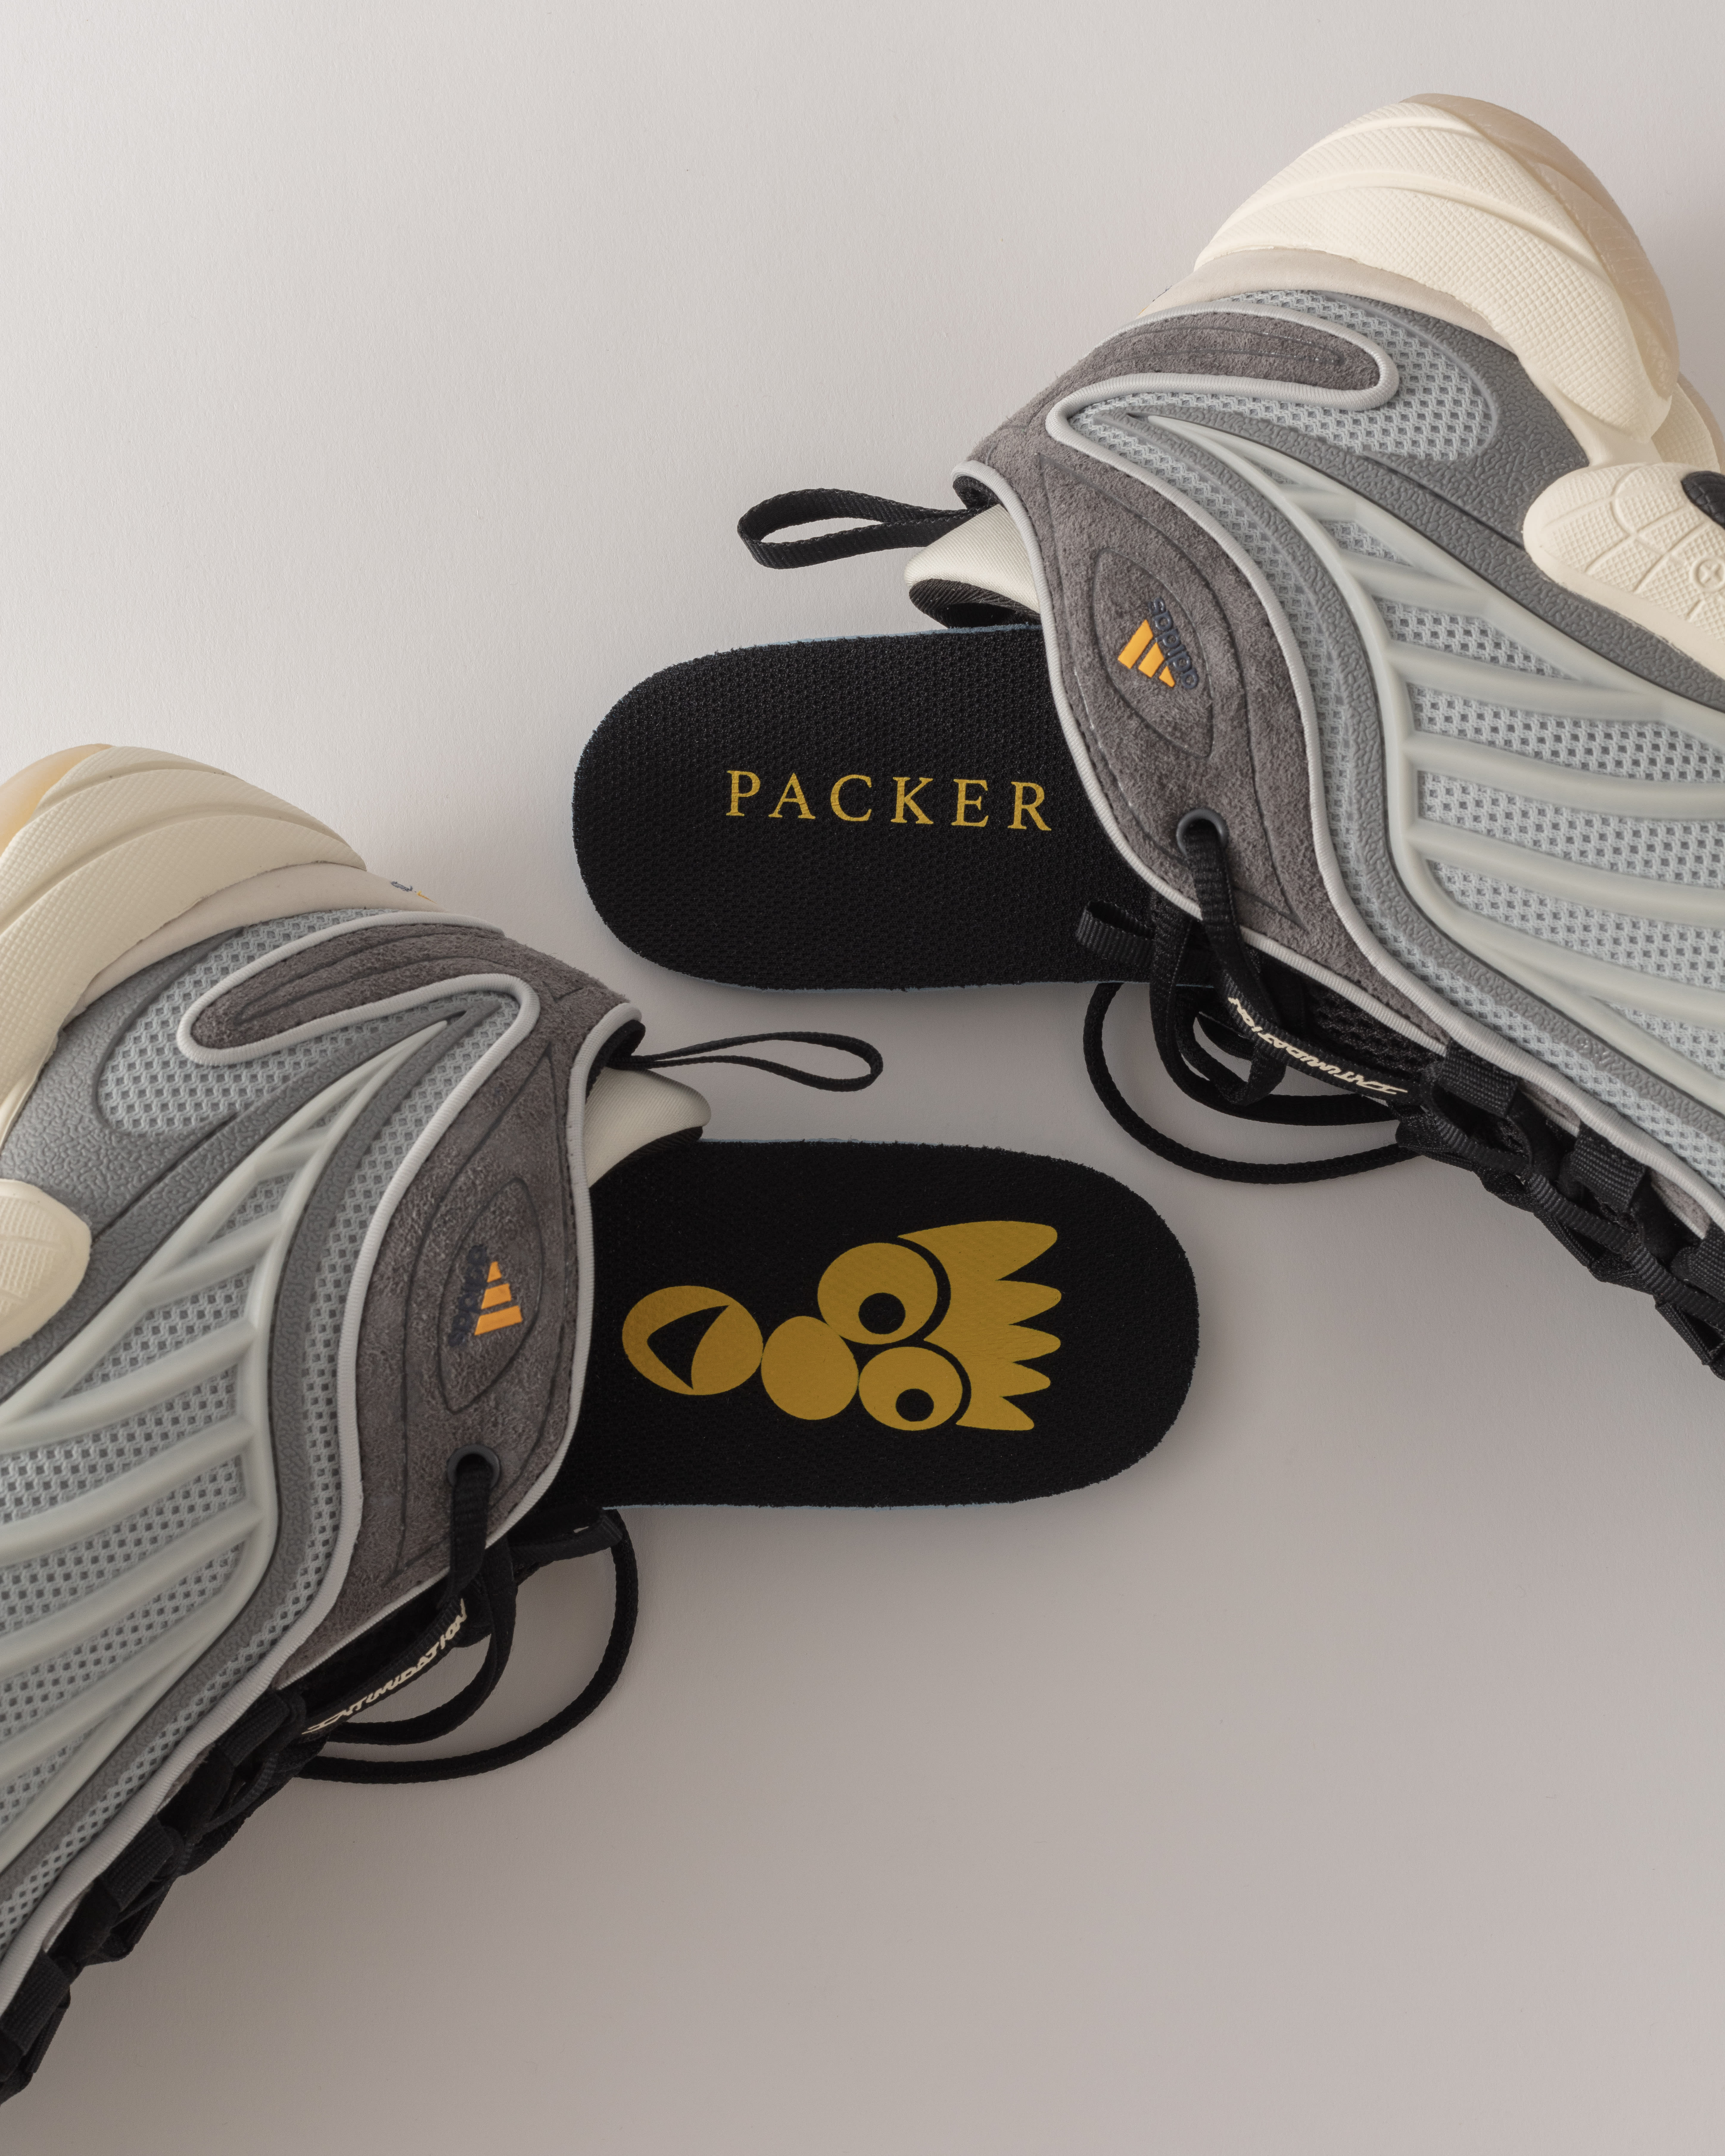 Packer x Adidas FYW Intimidation